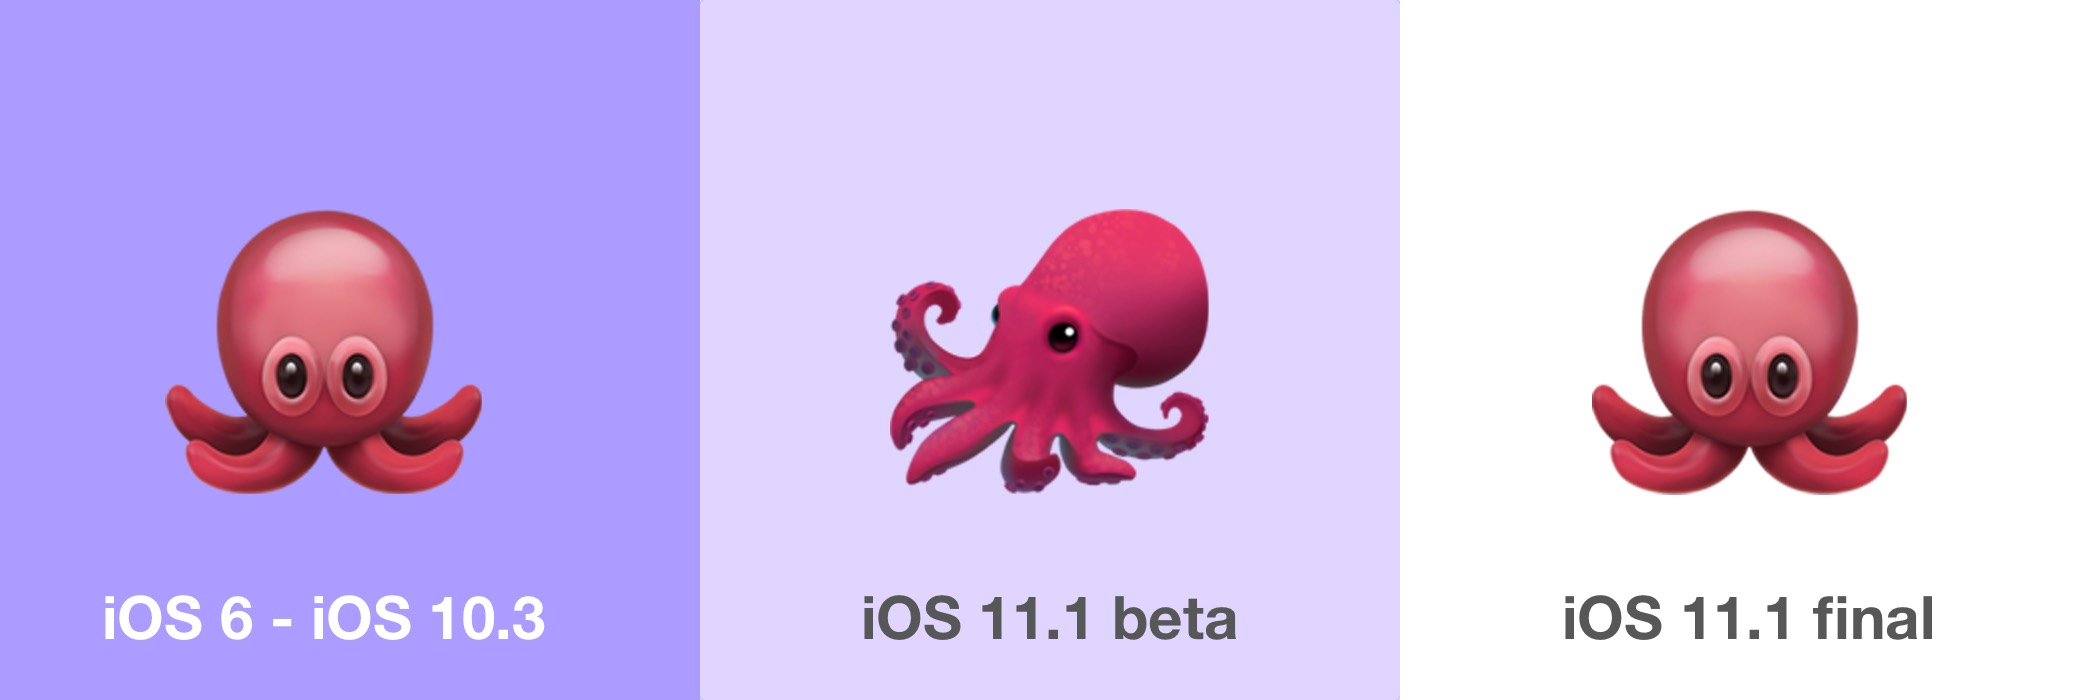 ios-11-octopus-emoji-changes-emojipedia